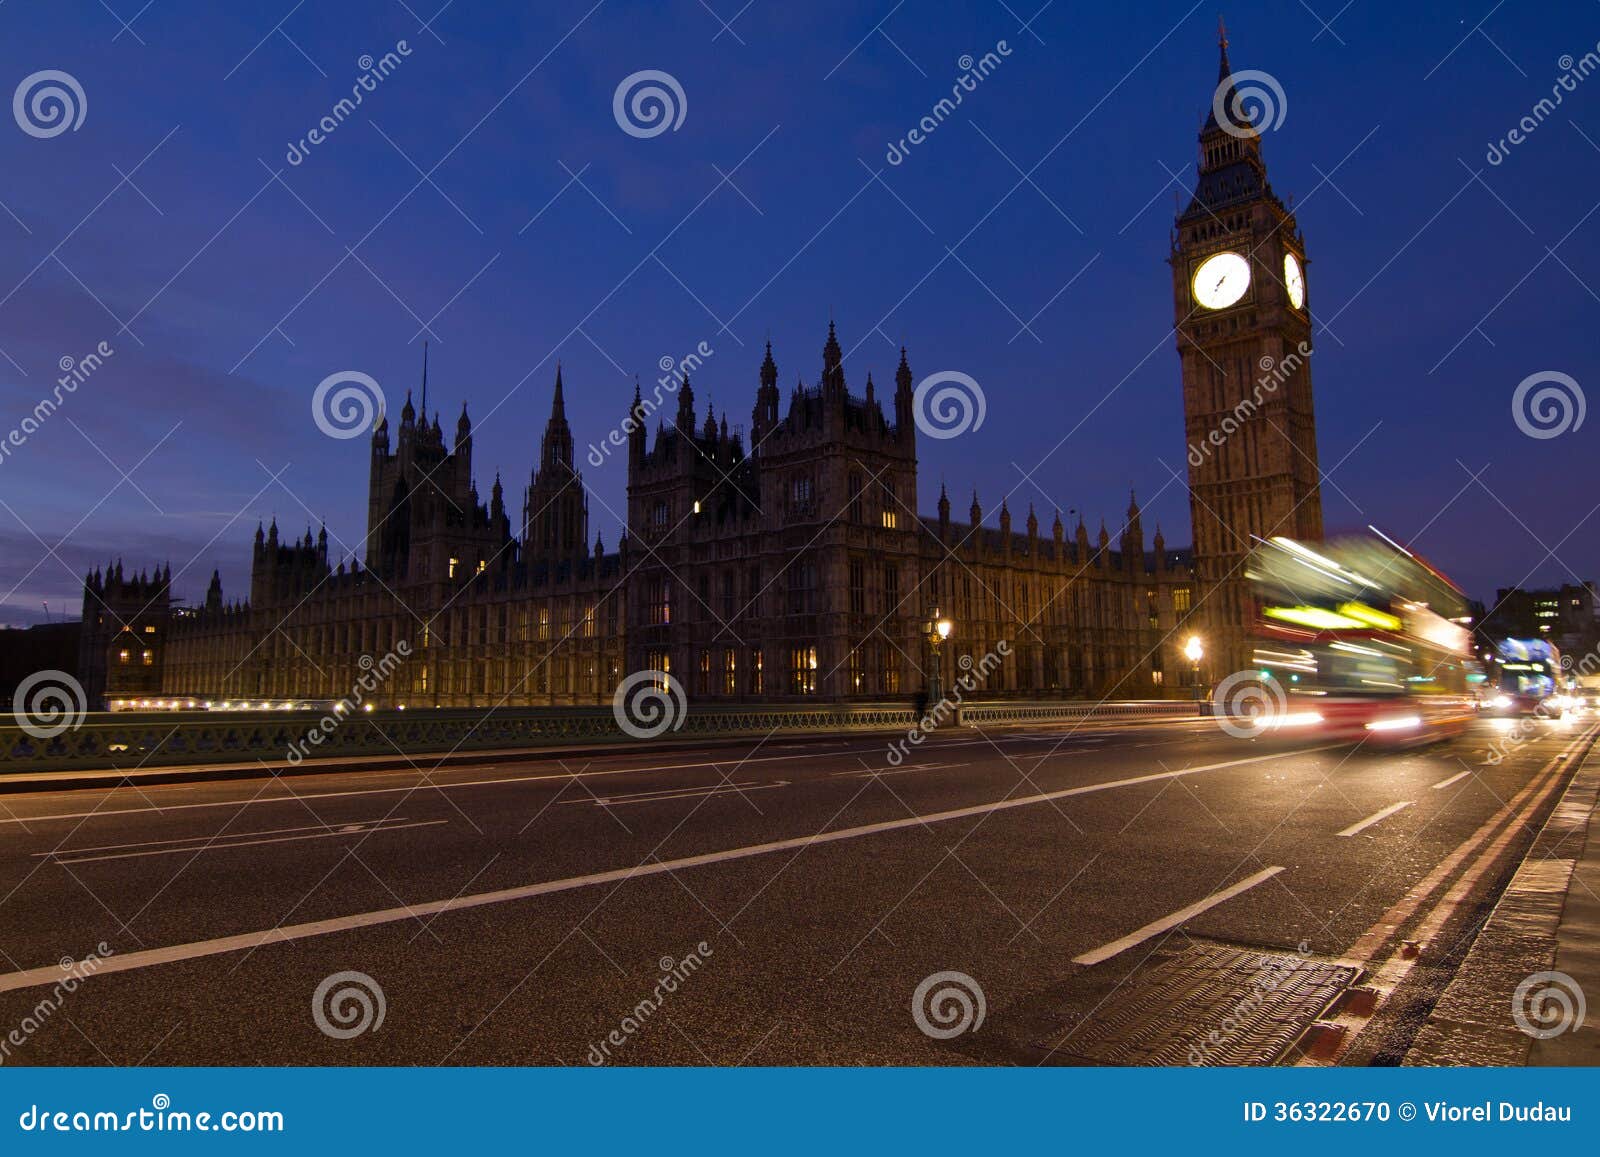 London view stock photo. Image of traffic, light, sights - 36322670